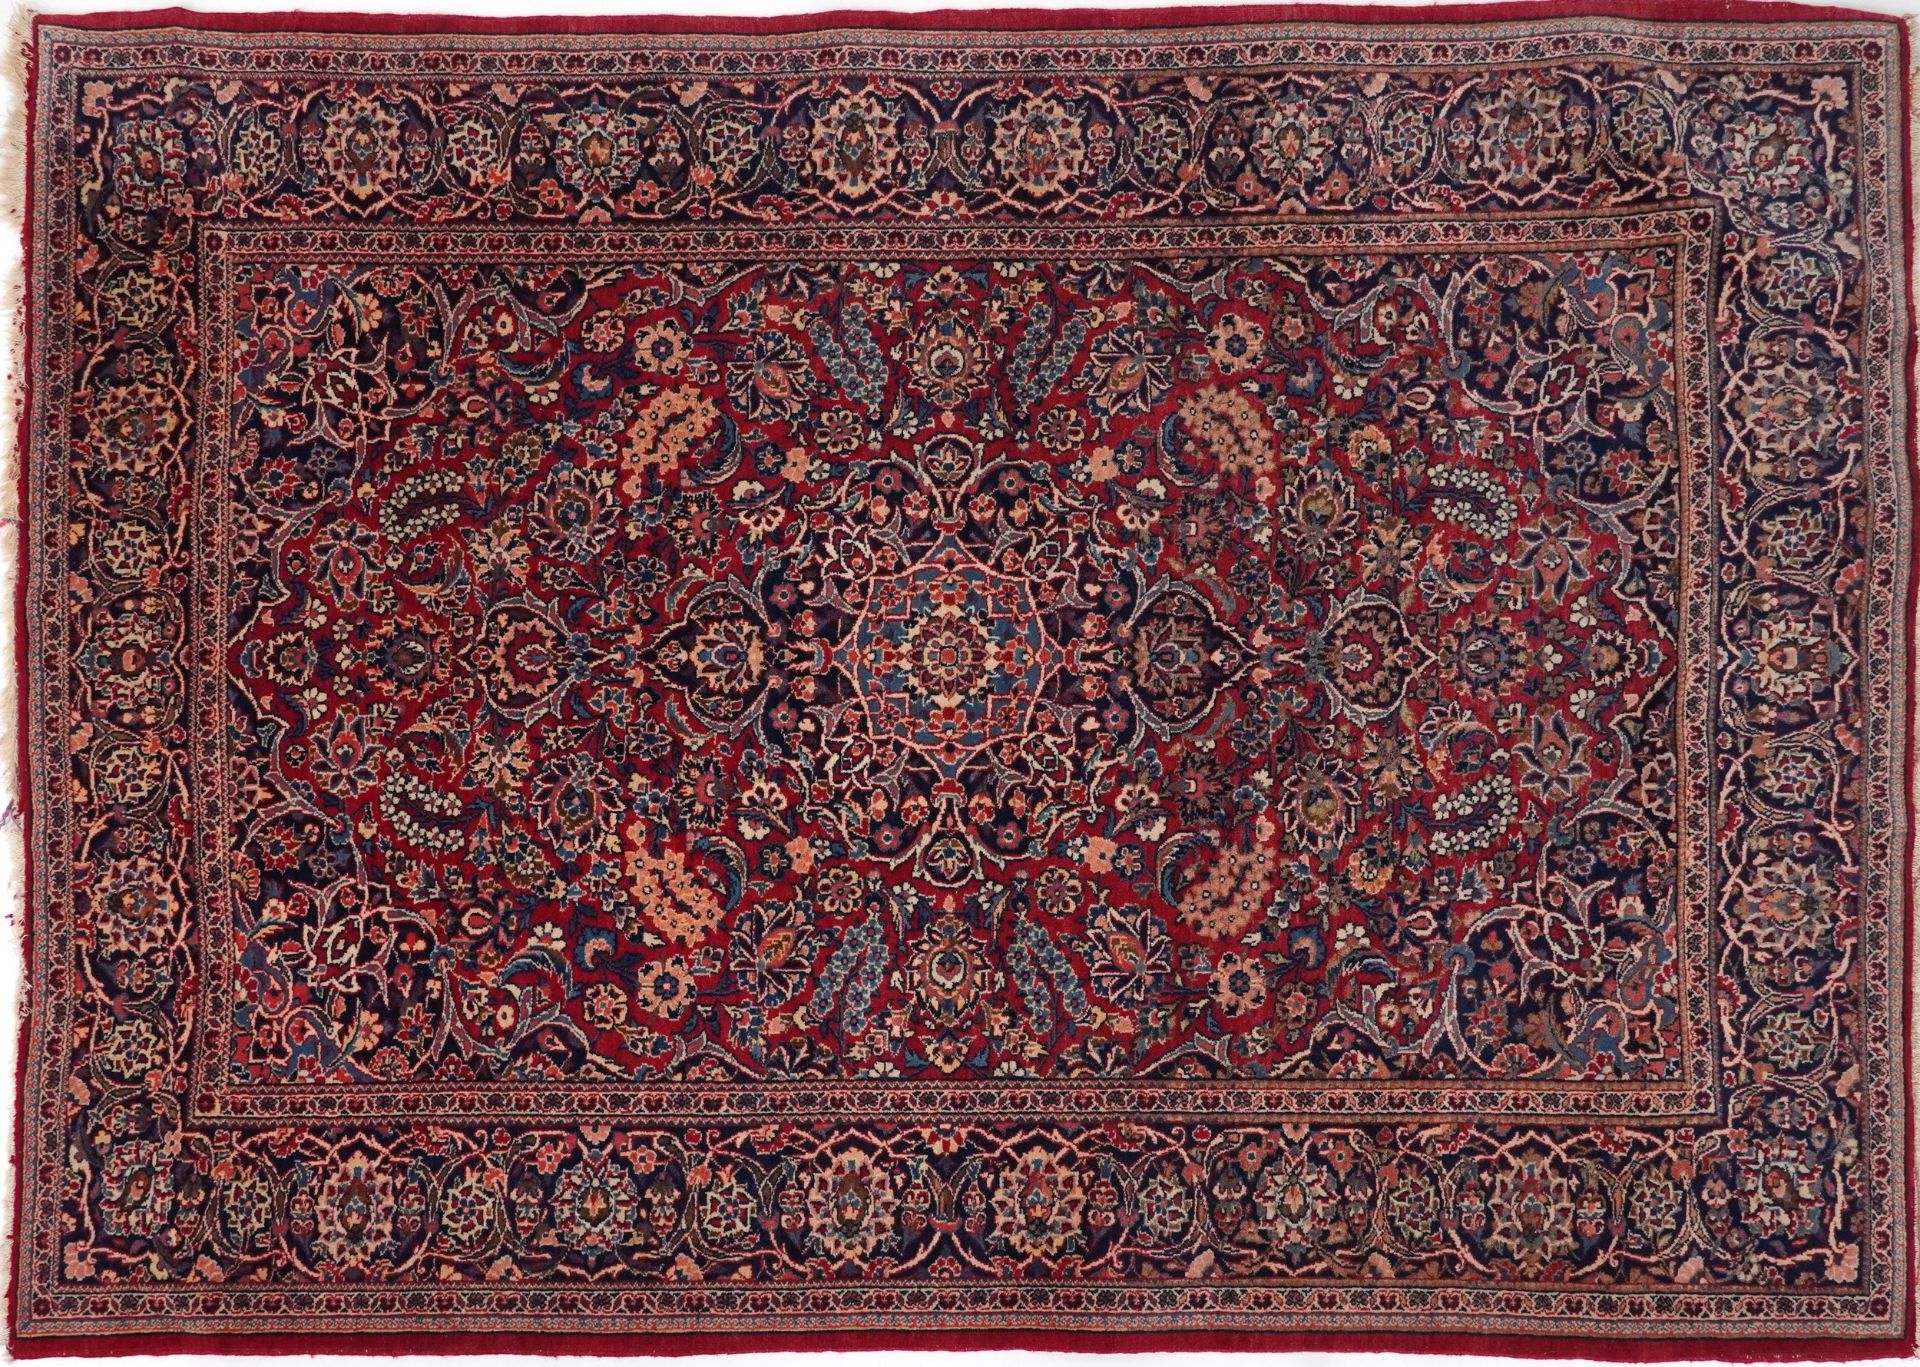 Rectangular Persian Sarouk type part silk red ground rug having an allover floral design, 214cm x